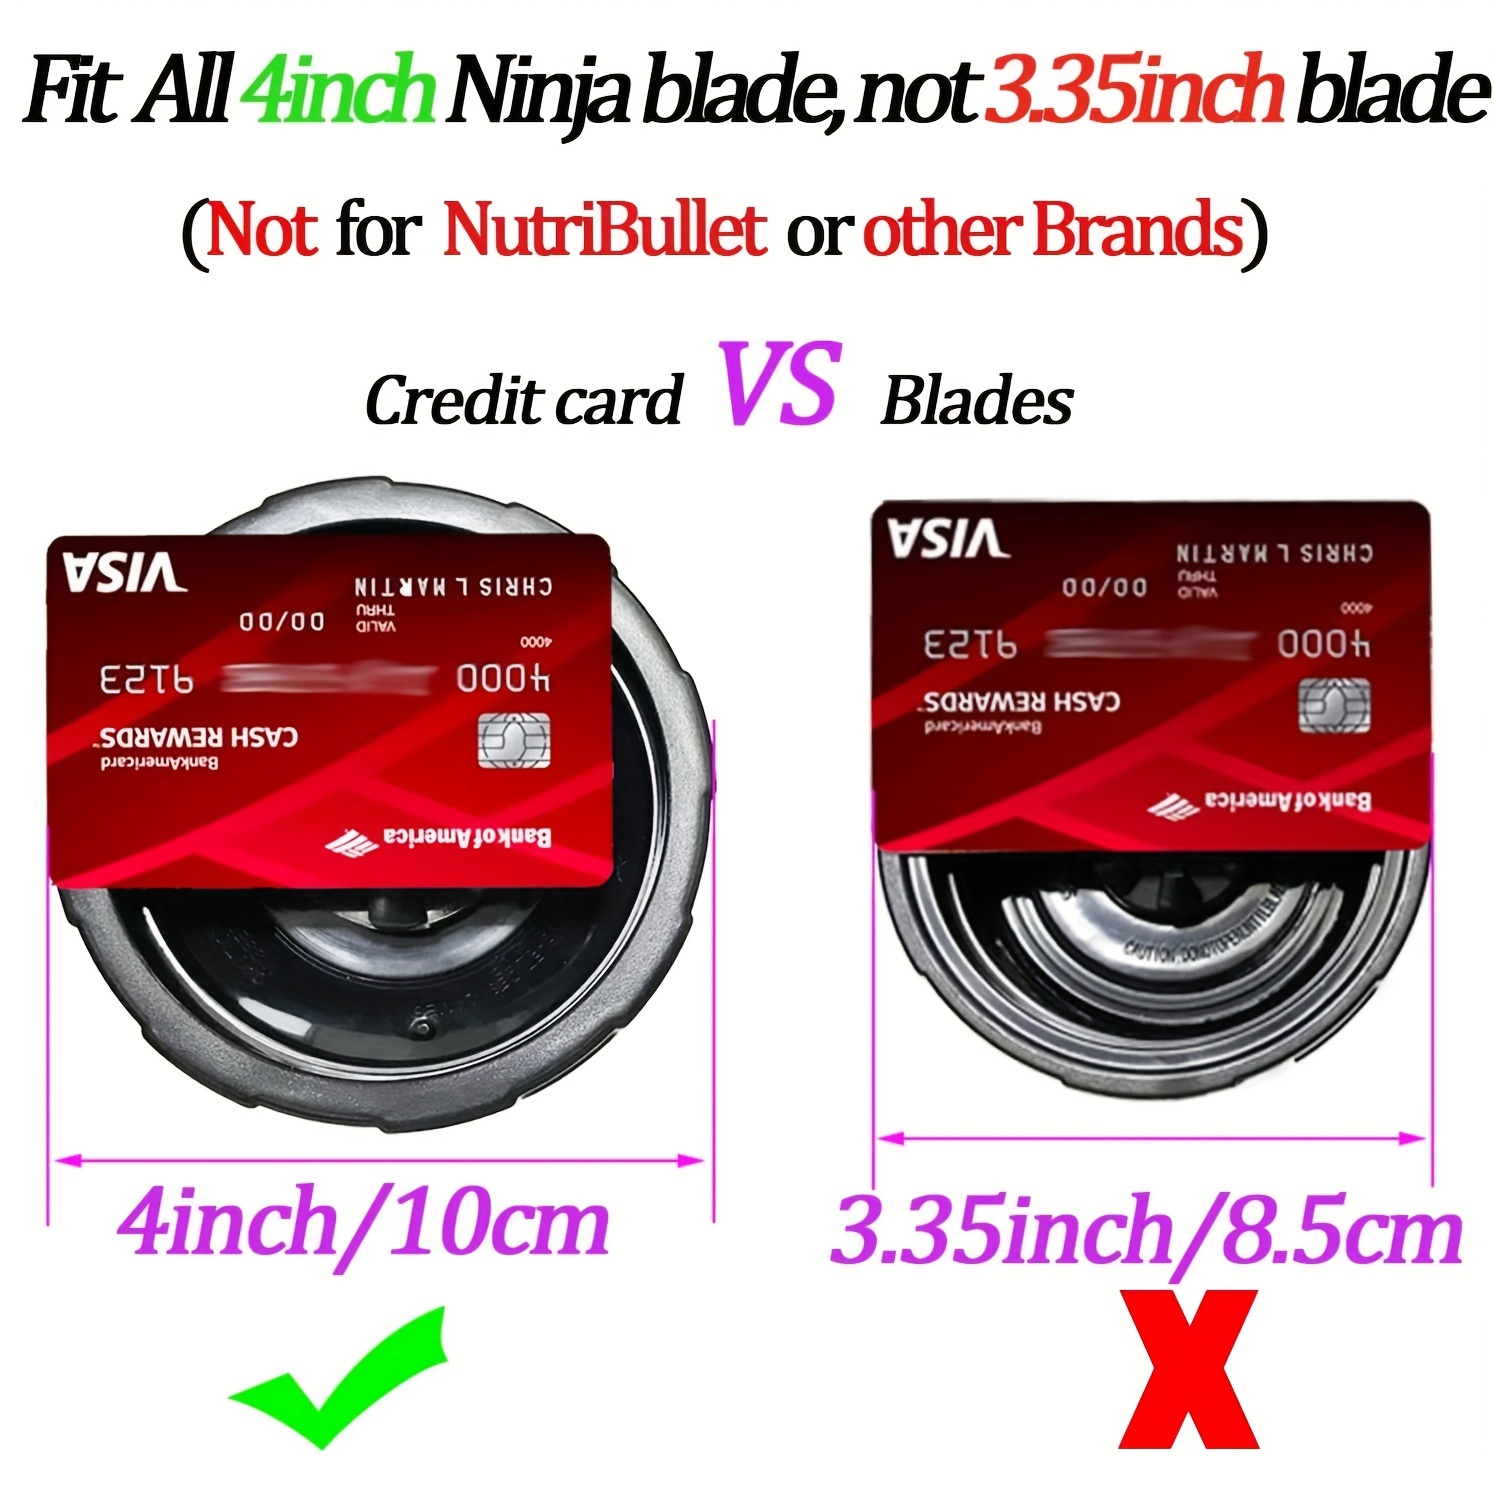 Nutri Ninja BL456 900W Professional Smoothie Blender w/ Cups, Red